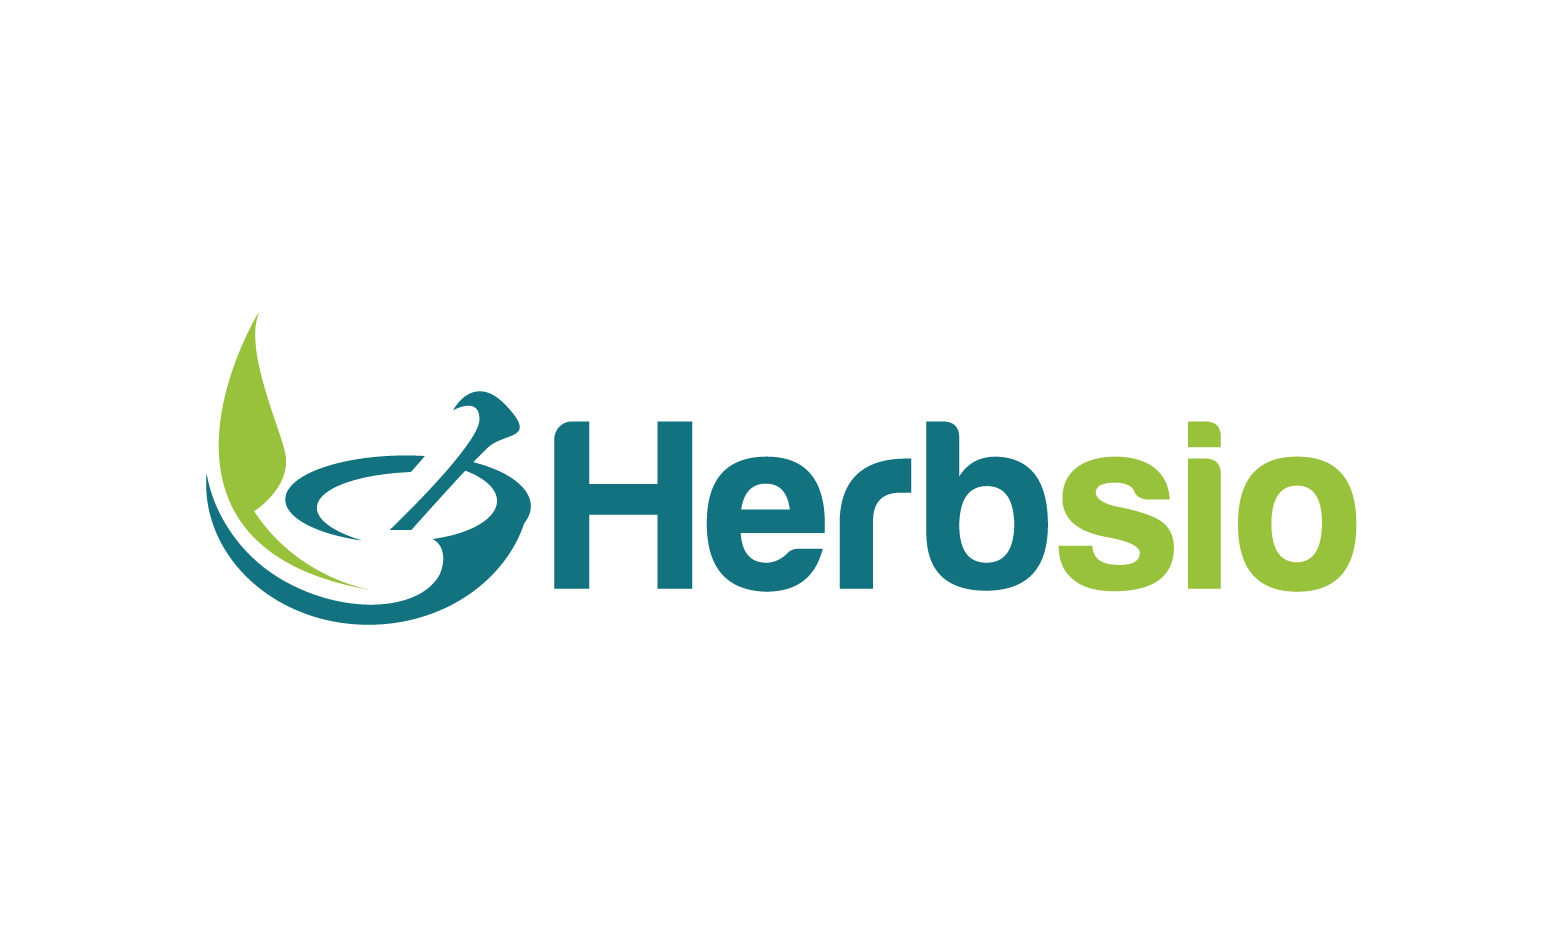 Herbsio.com - Creative brandable domain for sale